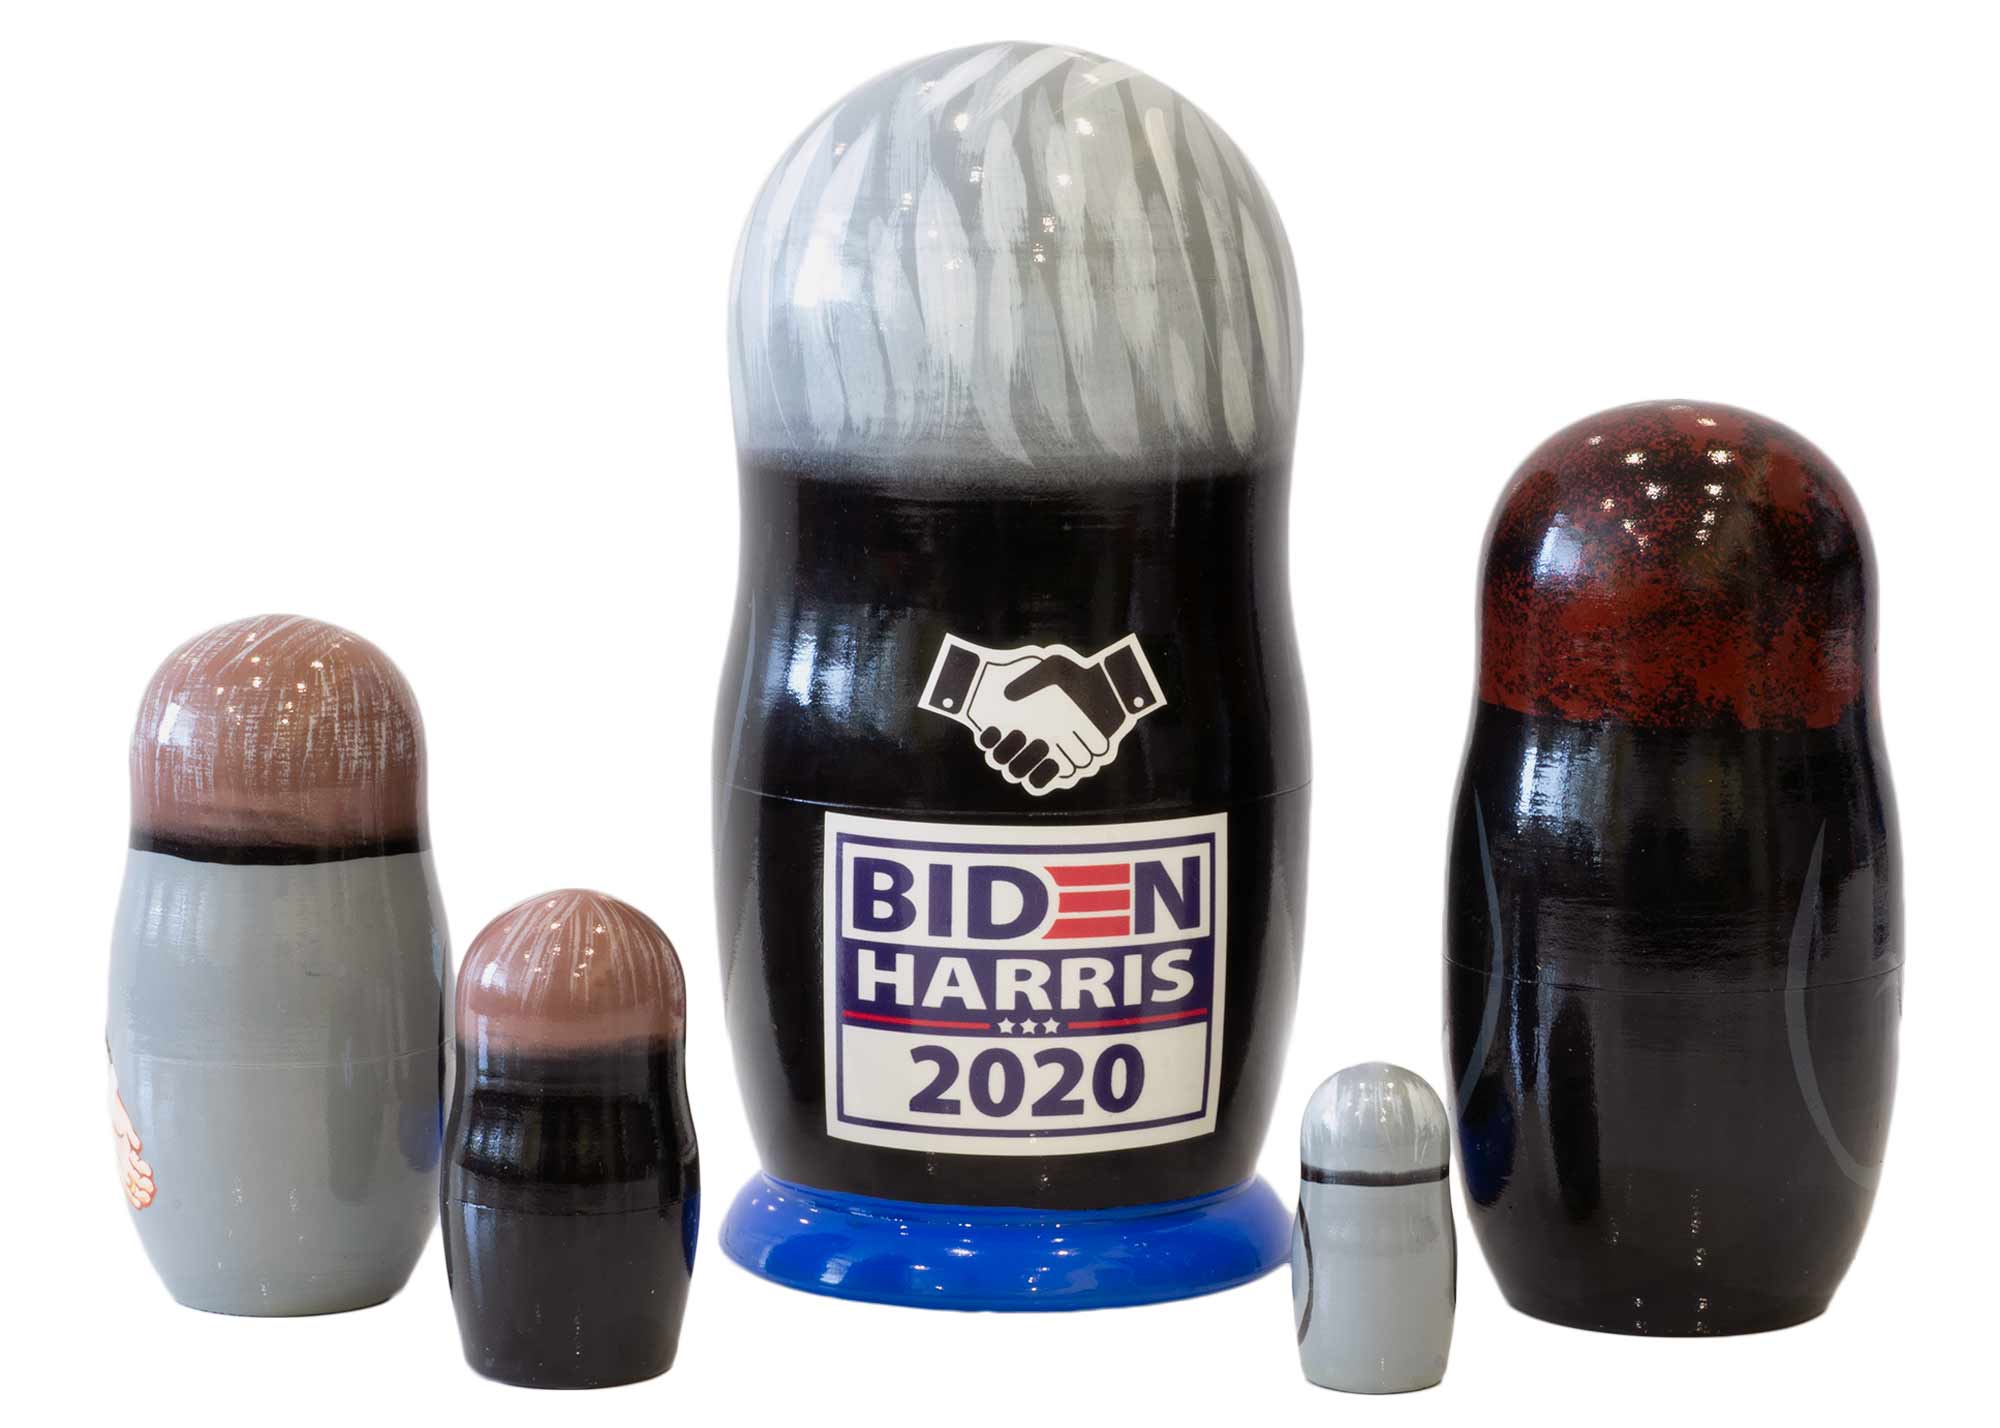 Buy Biden & Democratic Presidents Nesting Doll 5pc./6" at GoldenCockerel.com